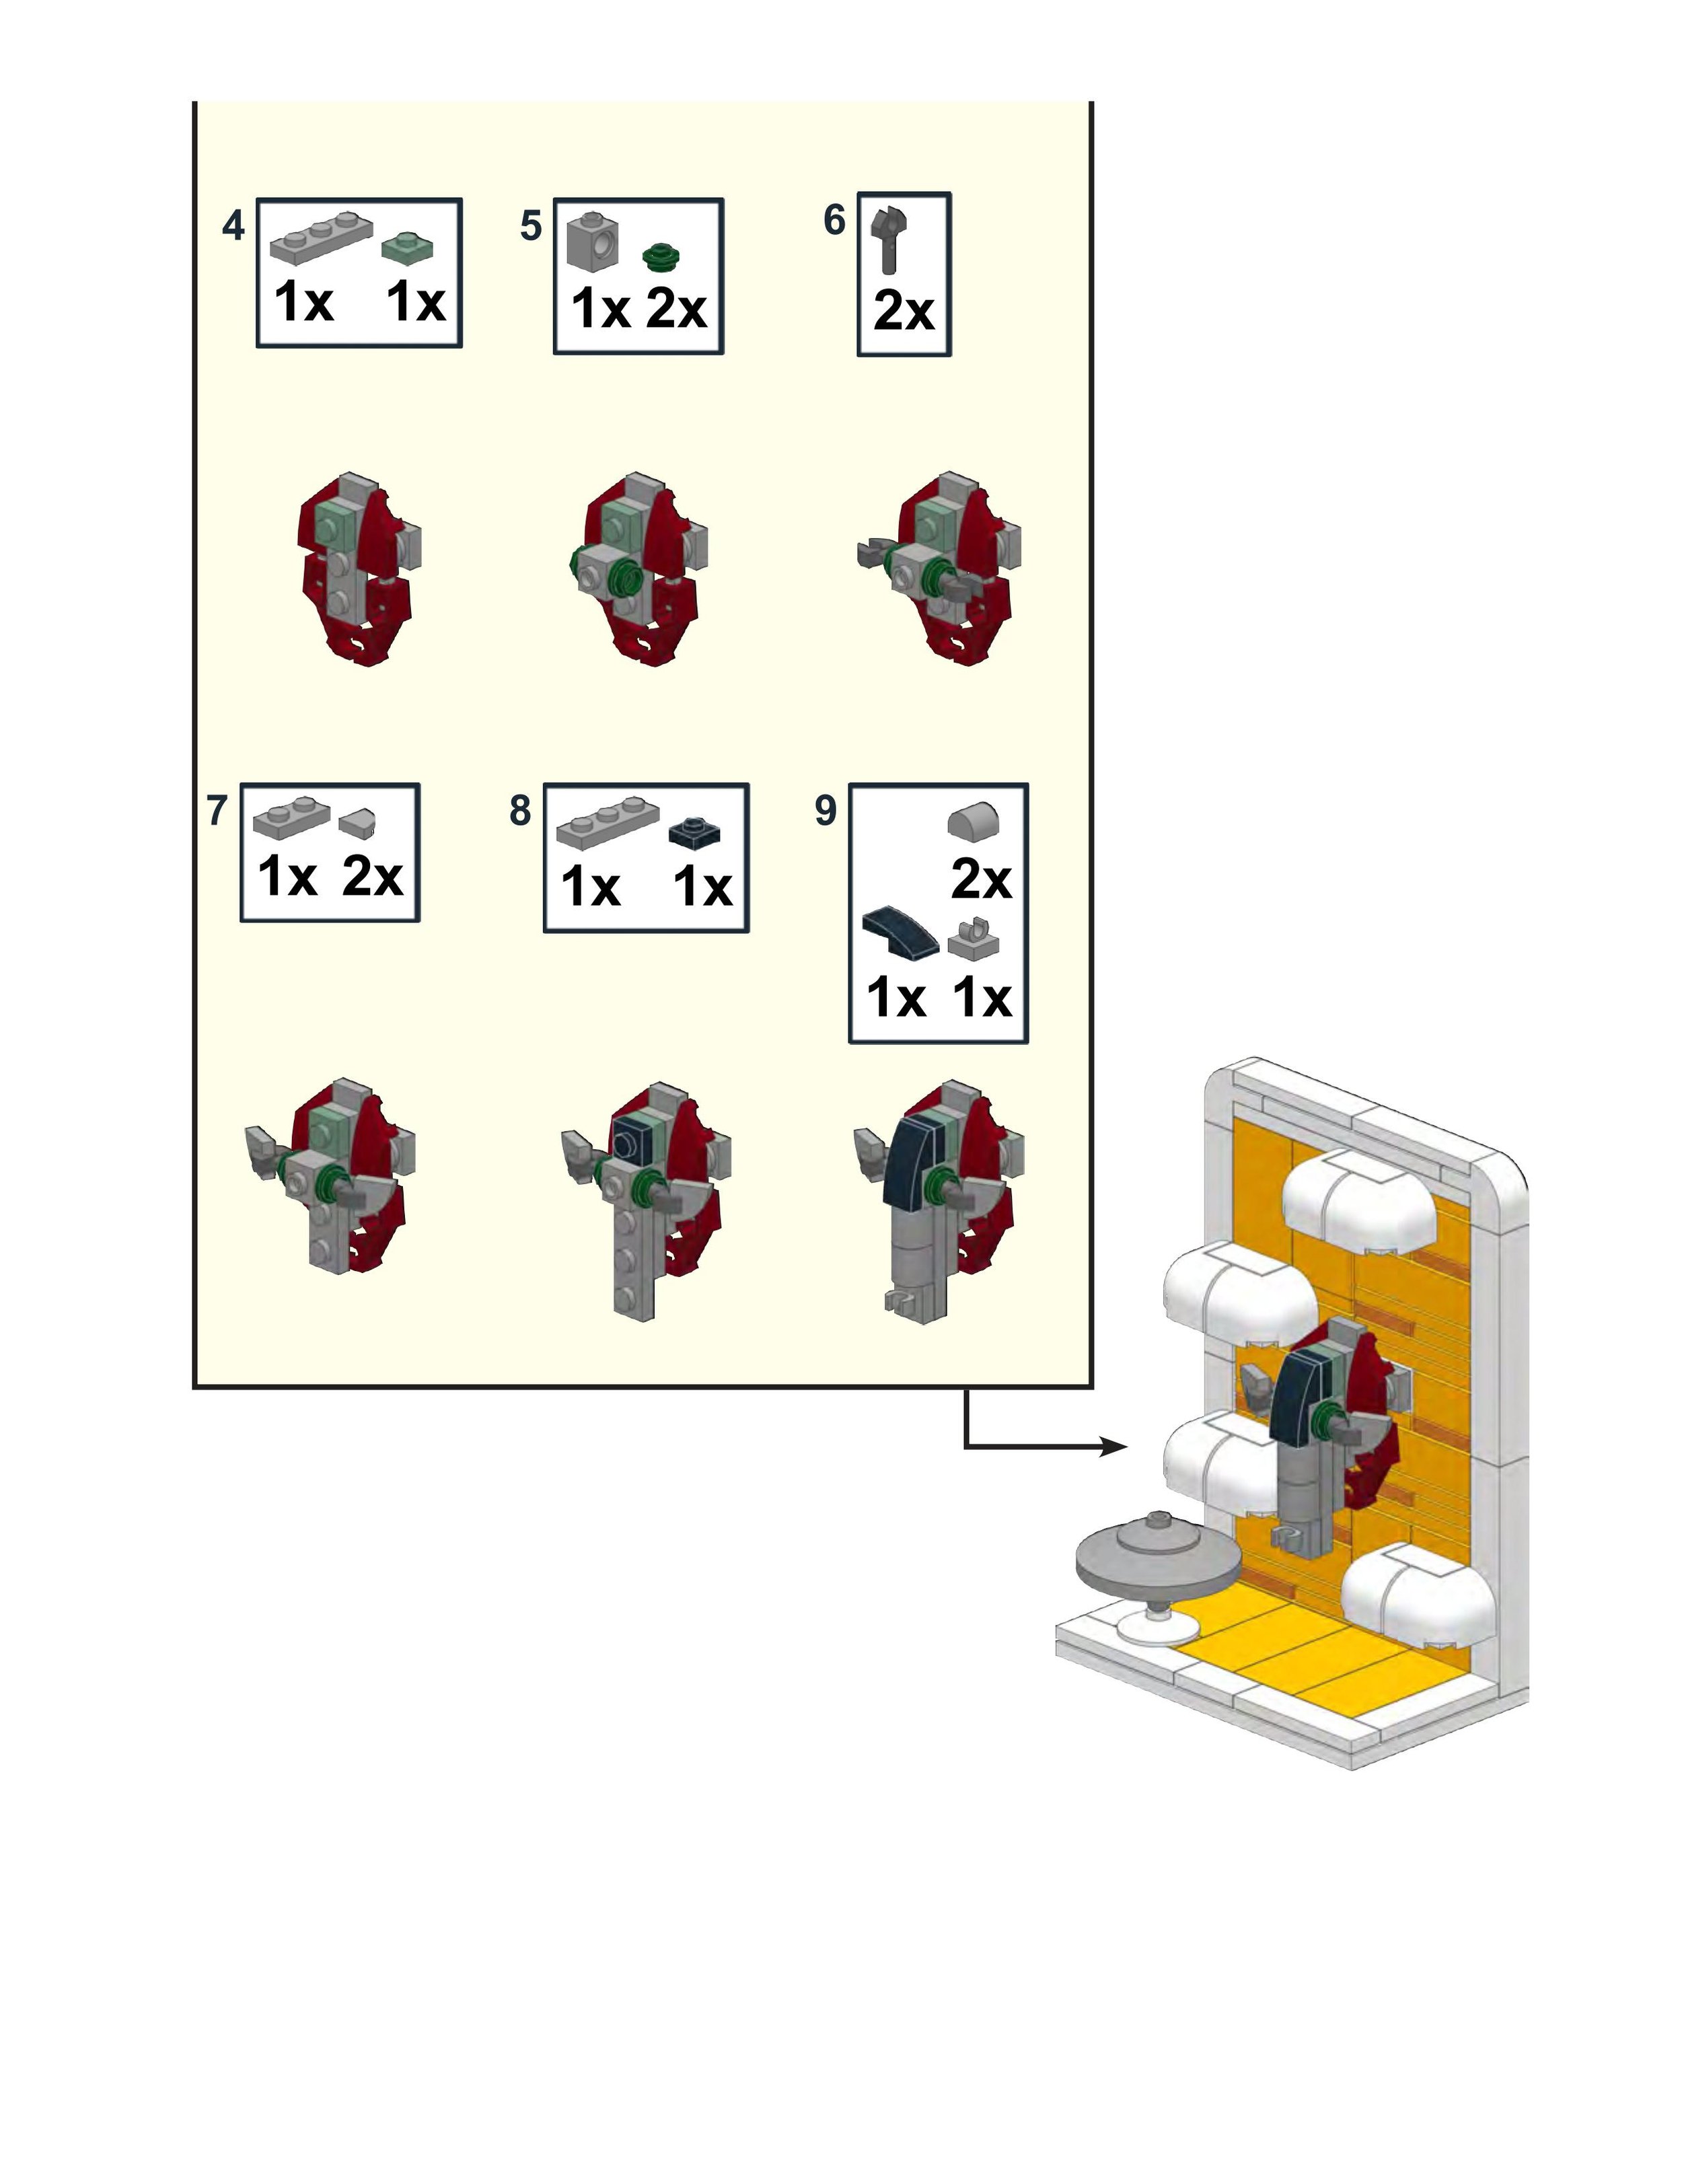 Flying by Bespin - Boba Fett and Cloud City Desk Vignette - LEGO Instructions - BrickNerd - 5.jpg